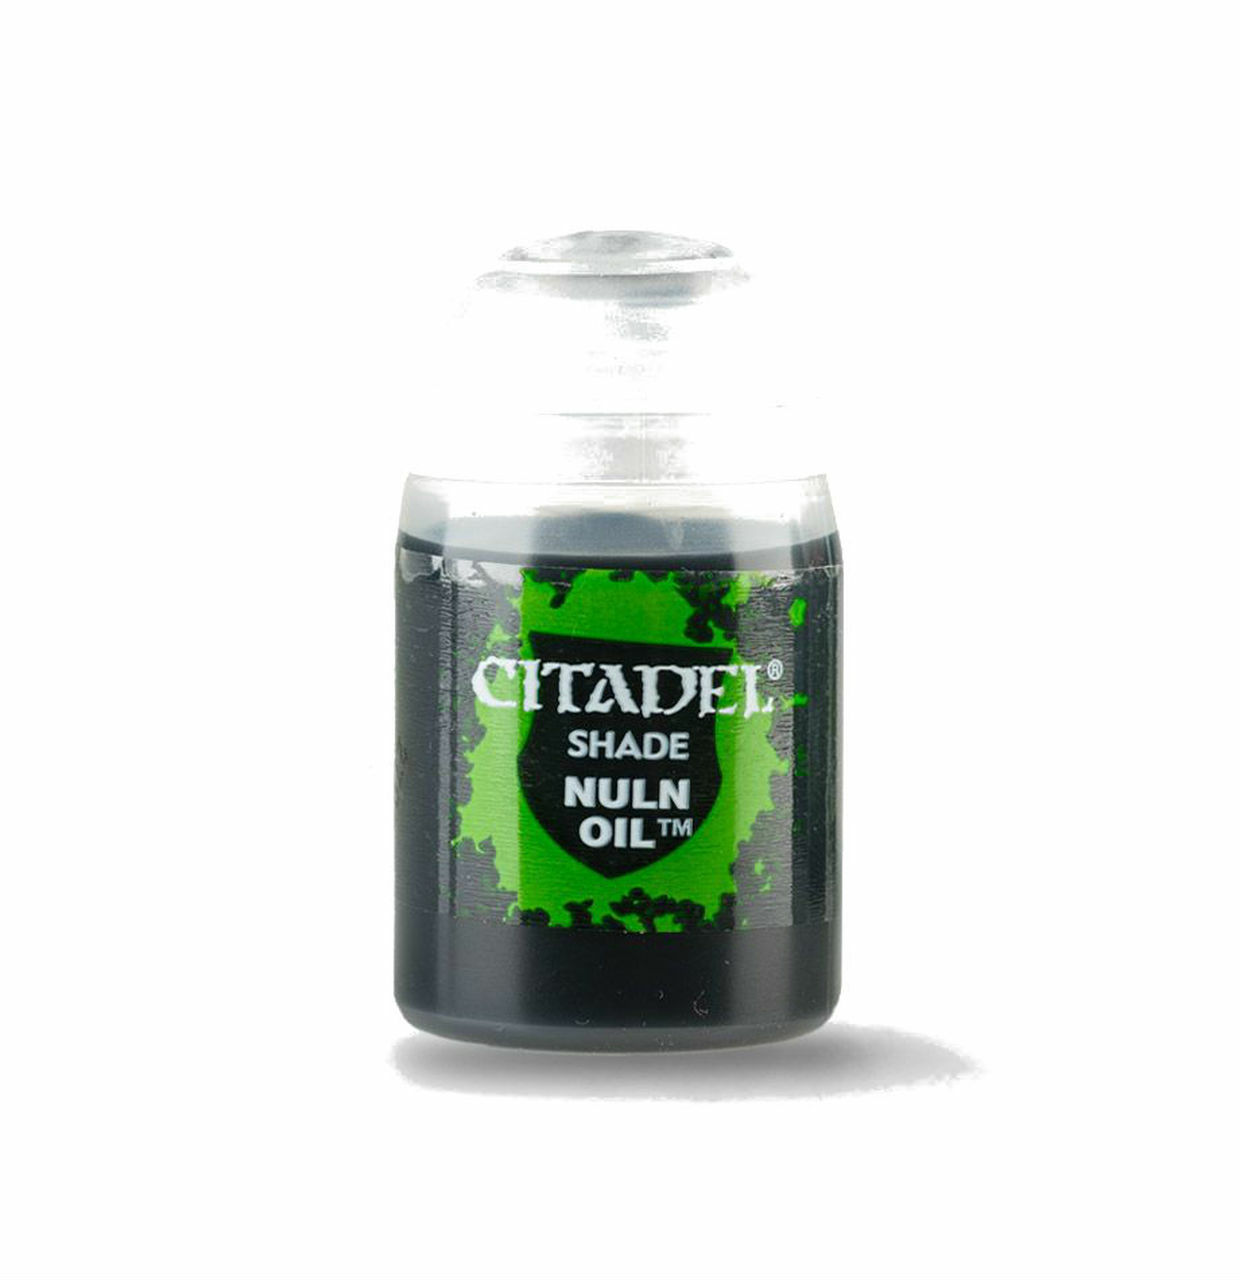 Citadel Paint: Shade - Nuln Oil Gloss 24 Ml